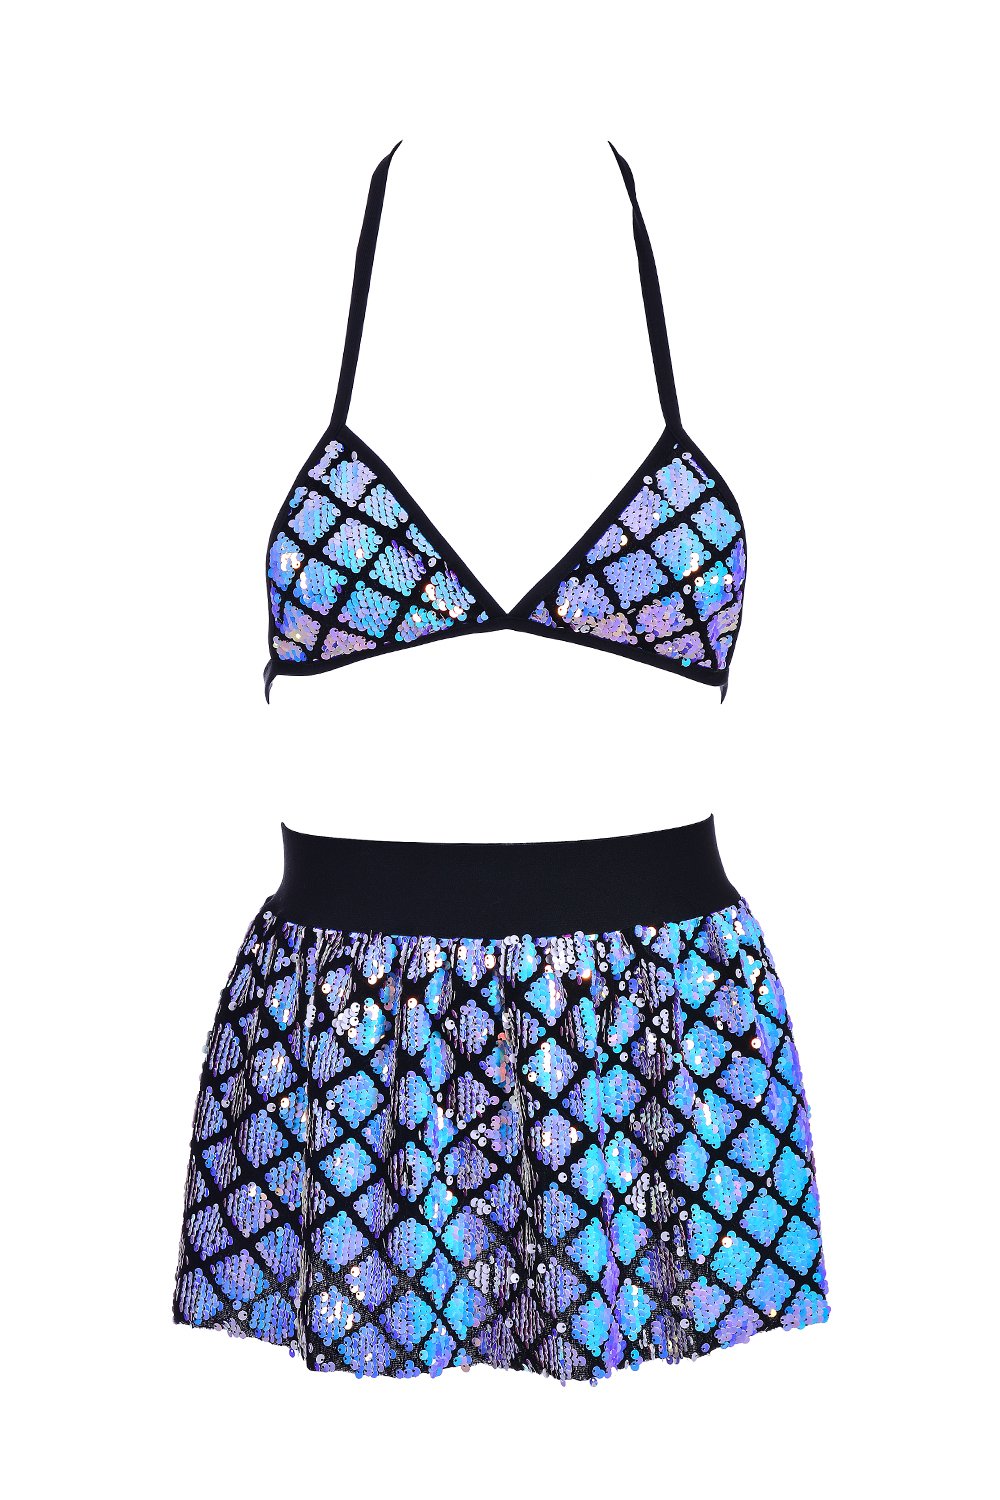 Aquamarine Queen Sequin Set (Bra + Skirt)